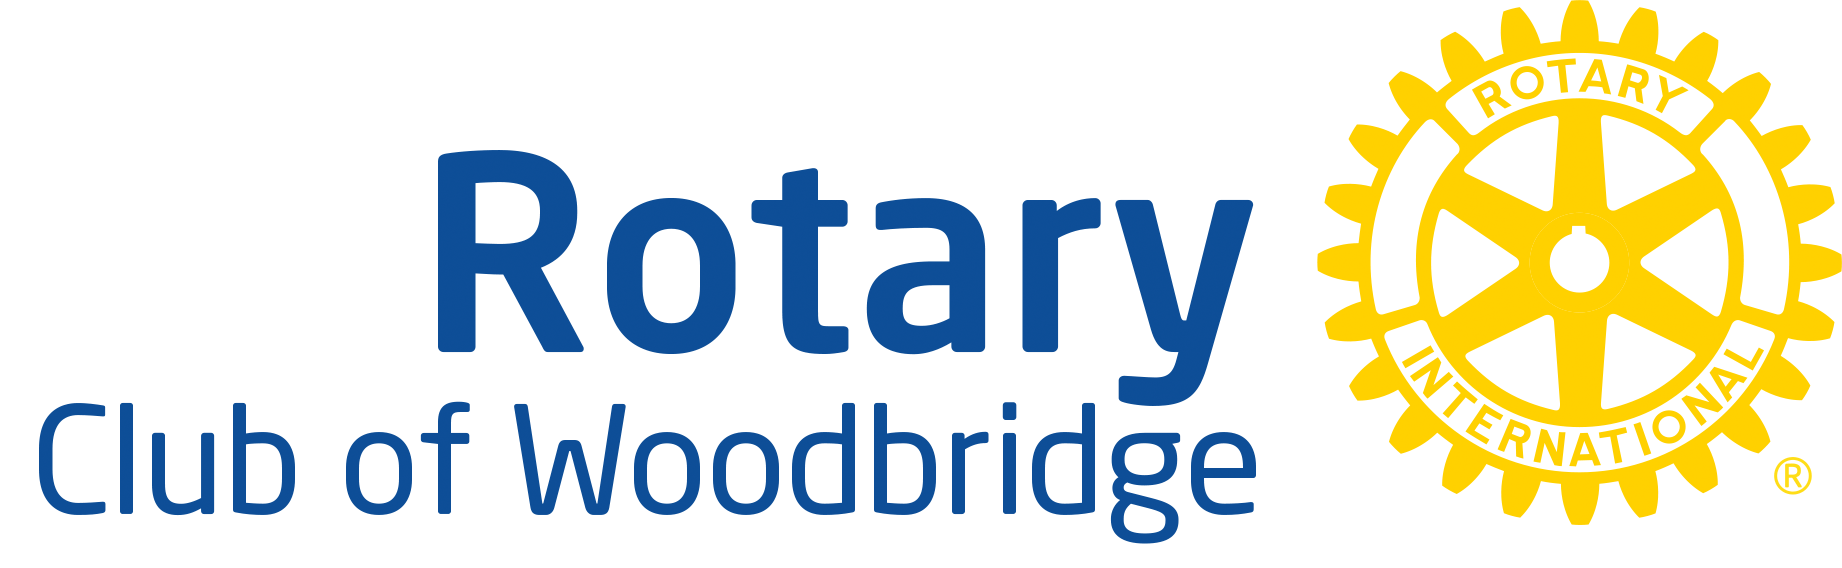 Woodbridge Logo - Home Page | Rotary Club of Woodbridge